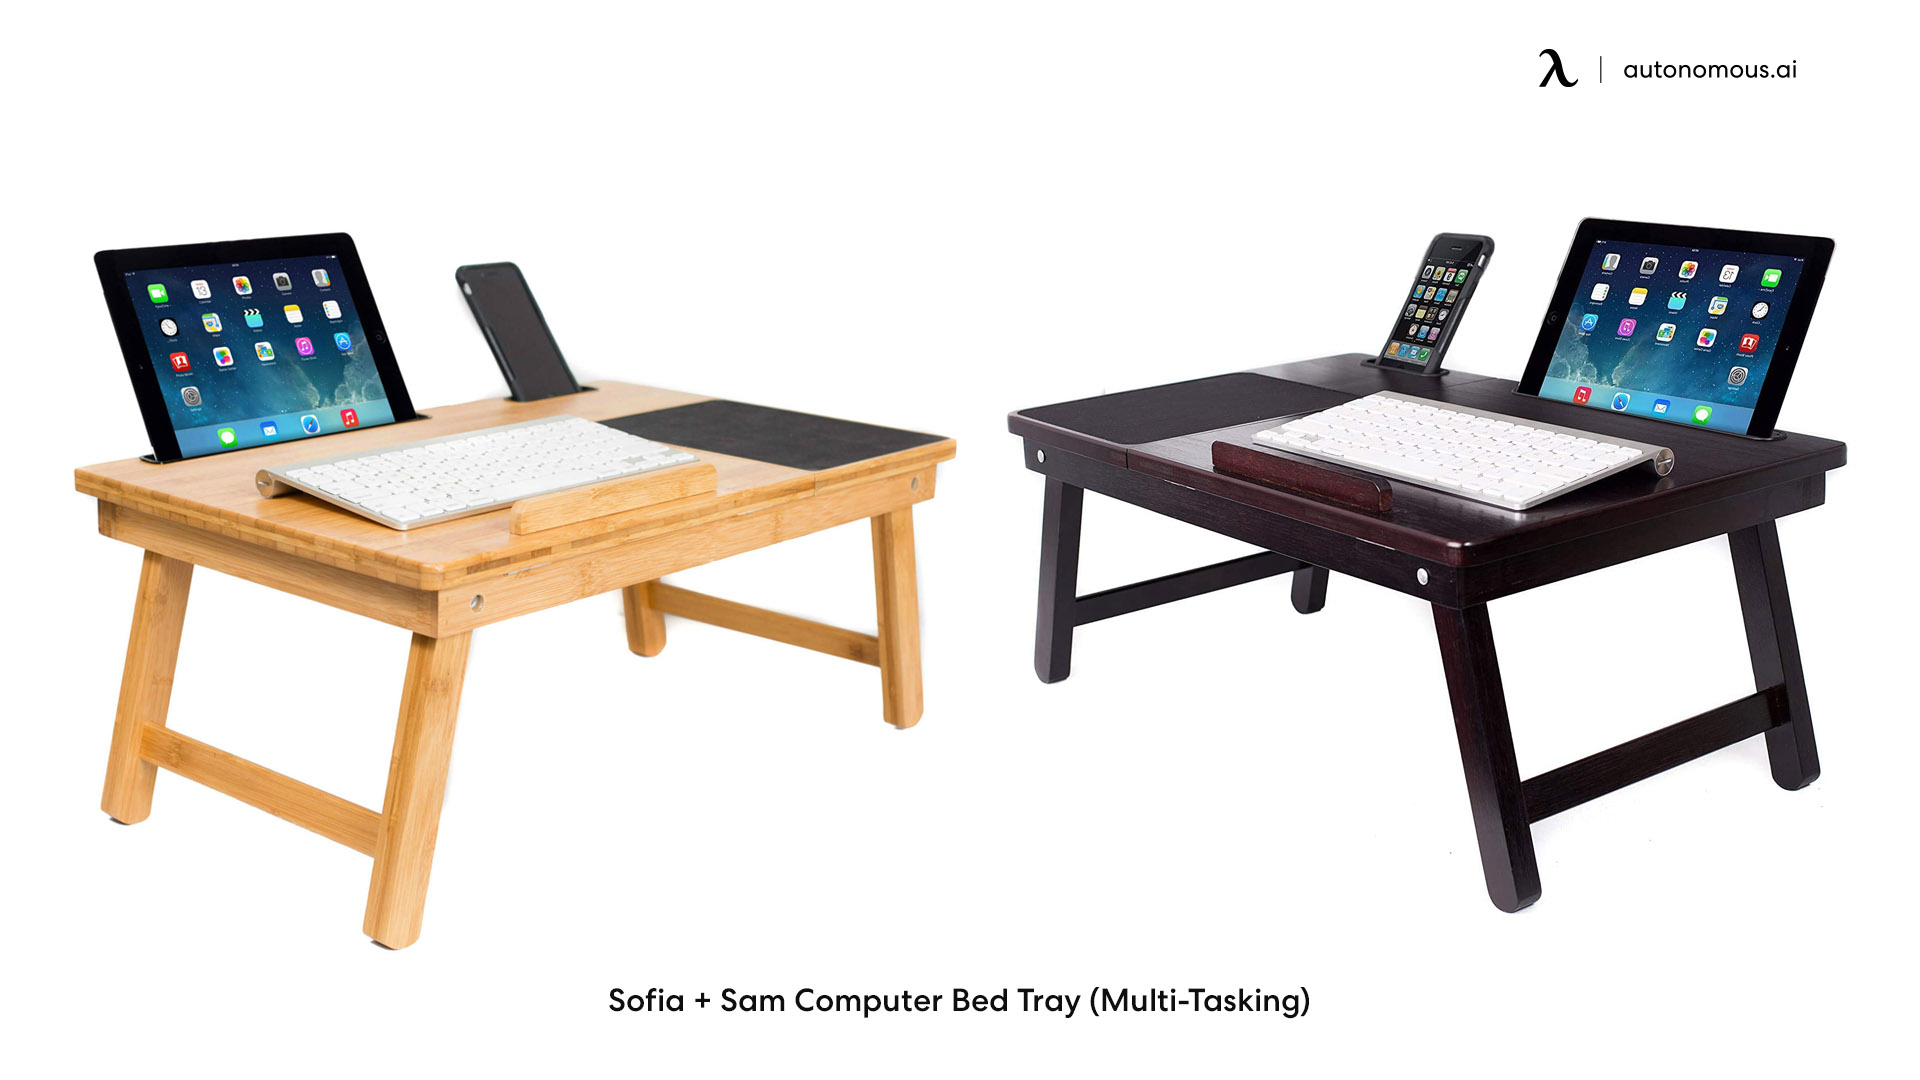 Sofia + Sam Computer Bed Tray (Multi-Tasking)